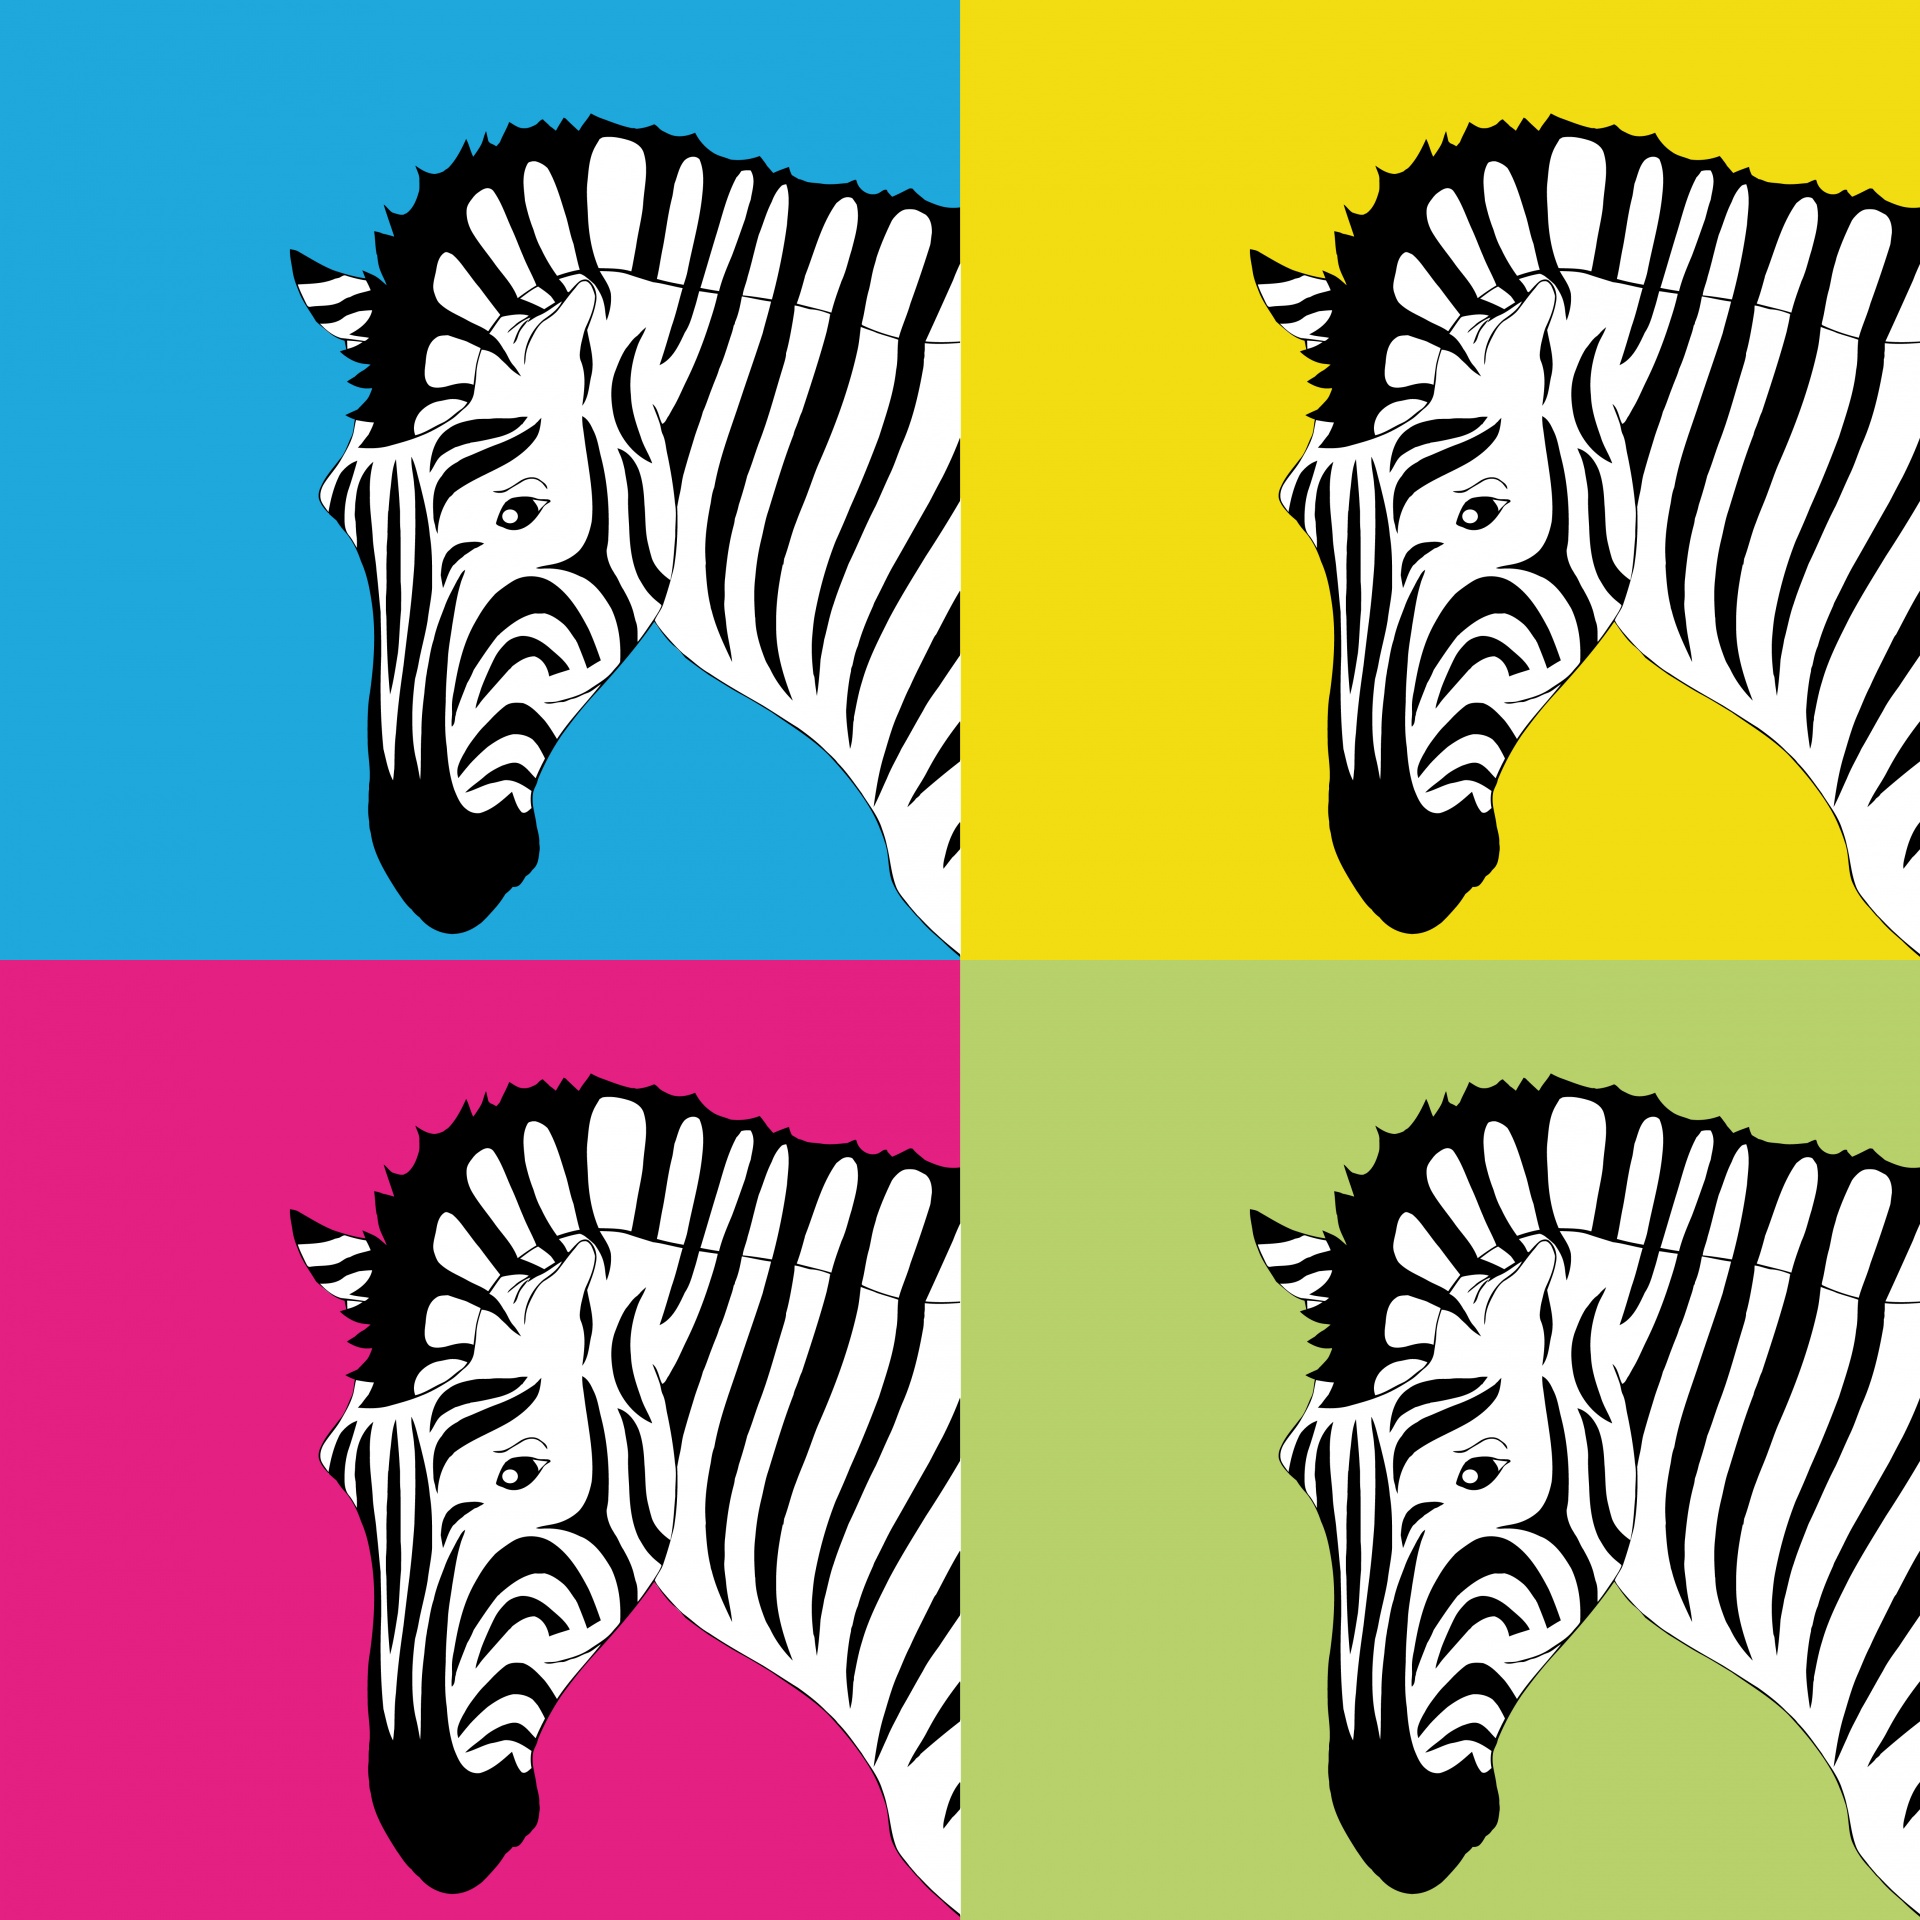 Zebra Pop Art Poster